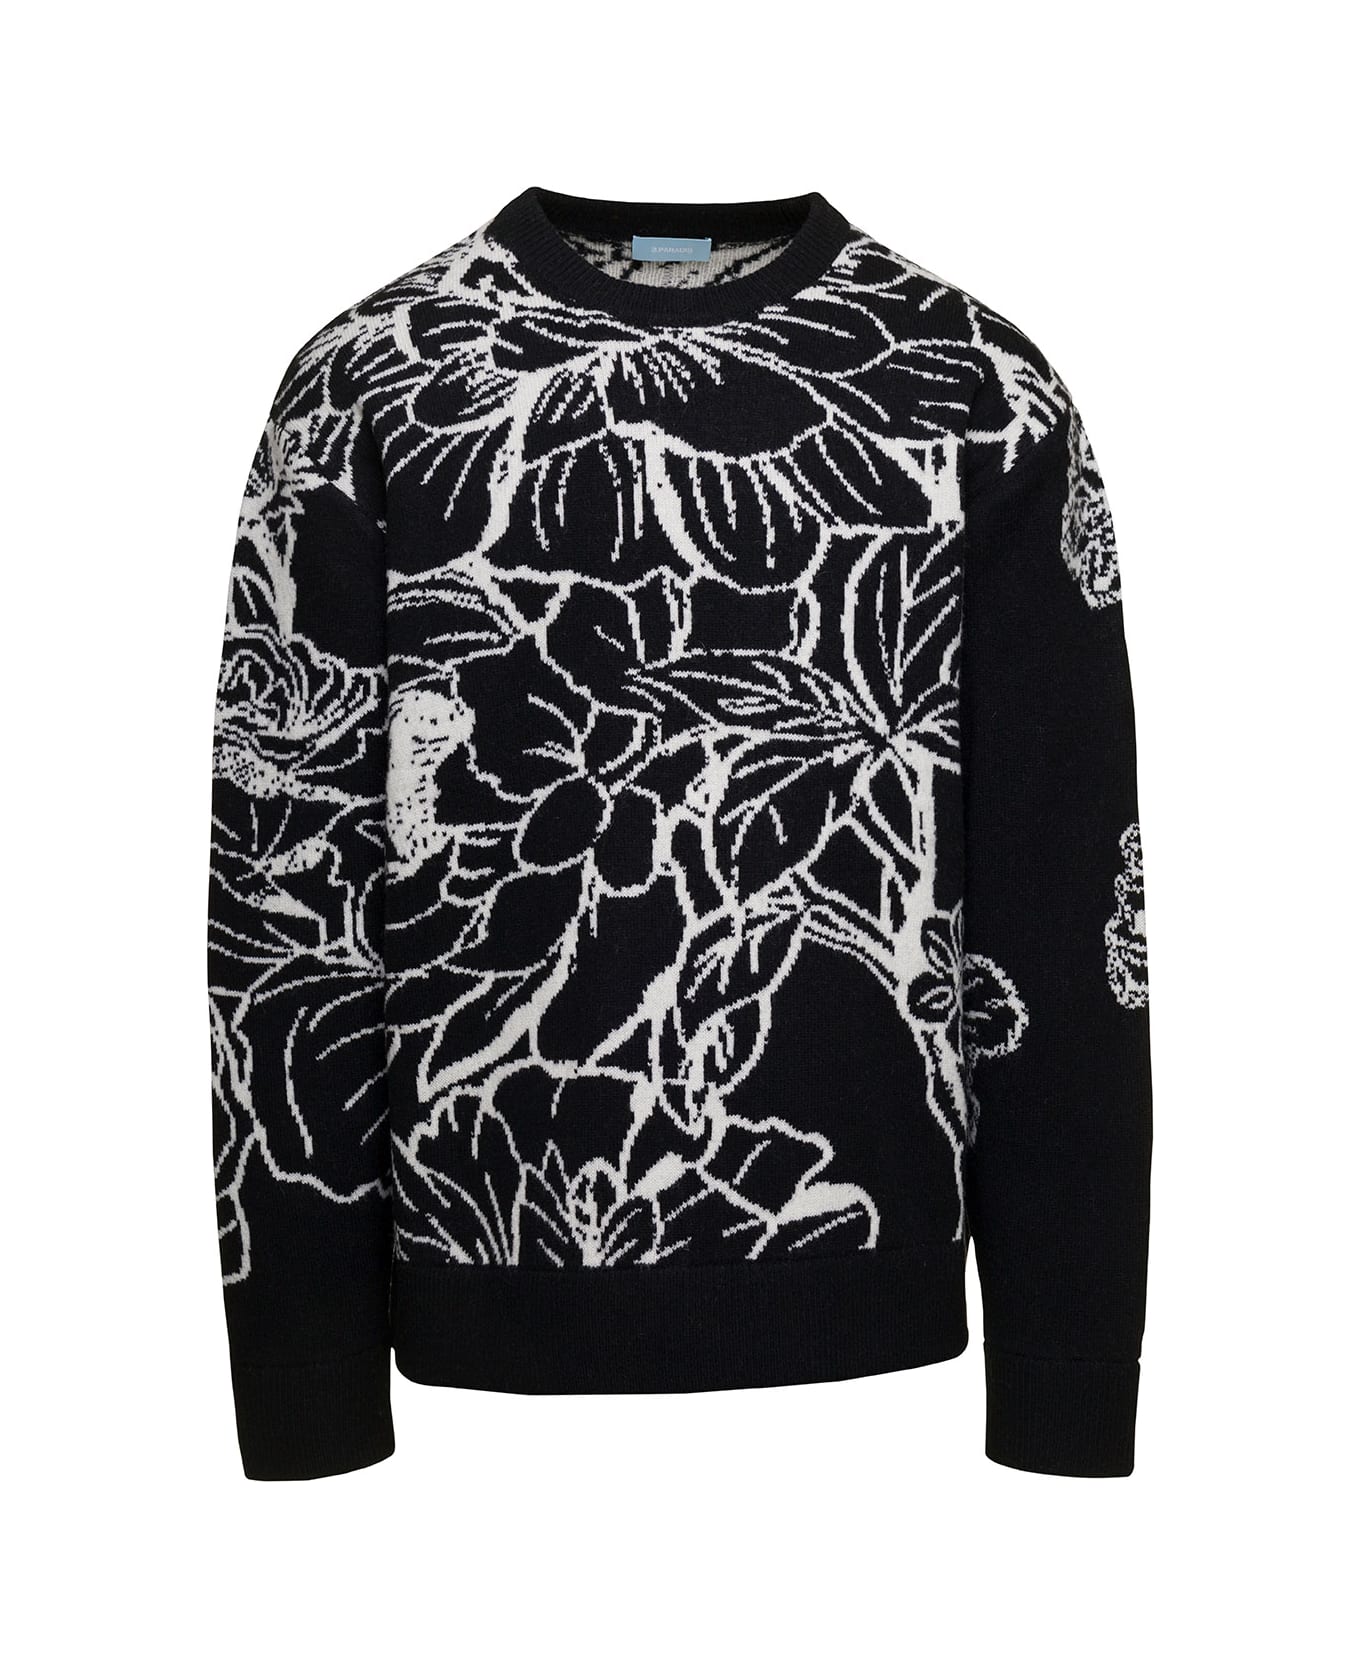 3.Paradis Knit Crewneck Sweater Flowers - Black